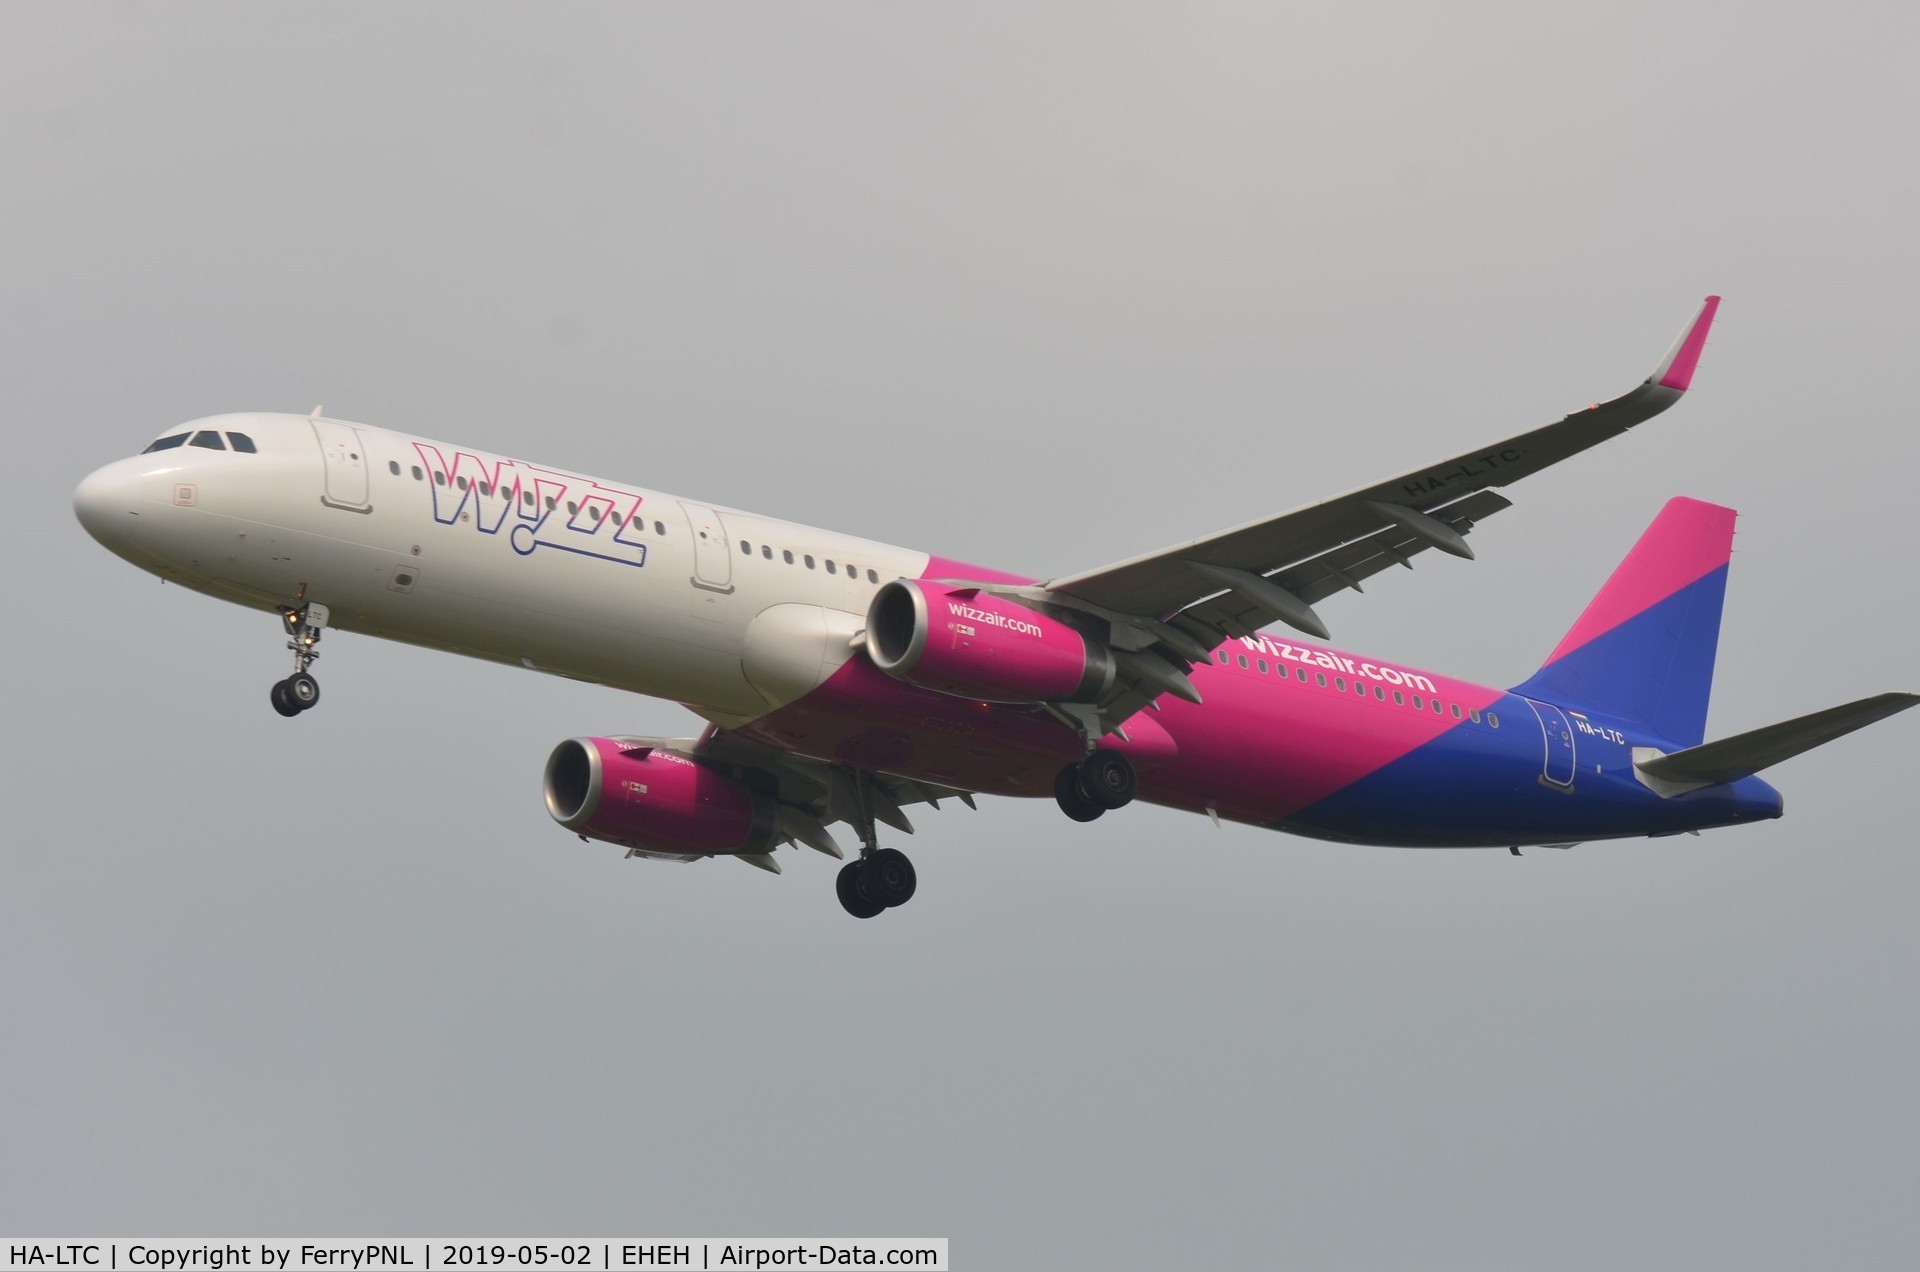 HA-LTC, 2018 Airbus A321-231 C/N 8295, Wizz Air A321 arriving in EIN